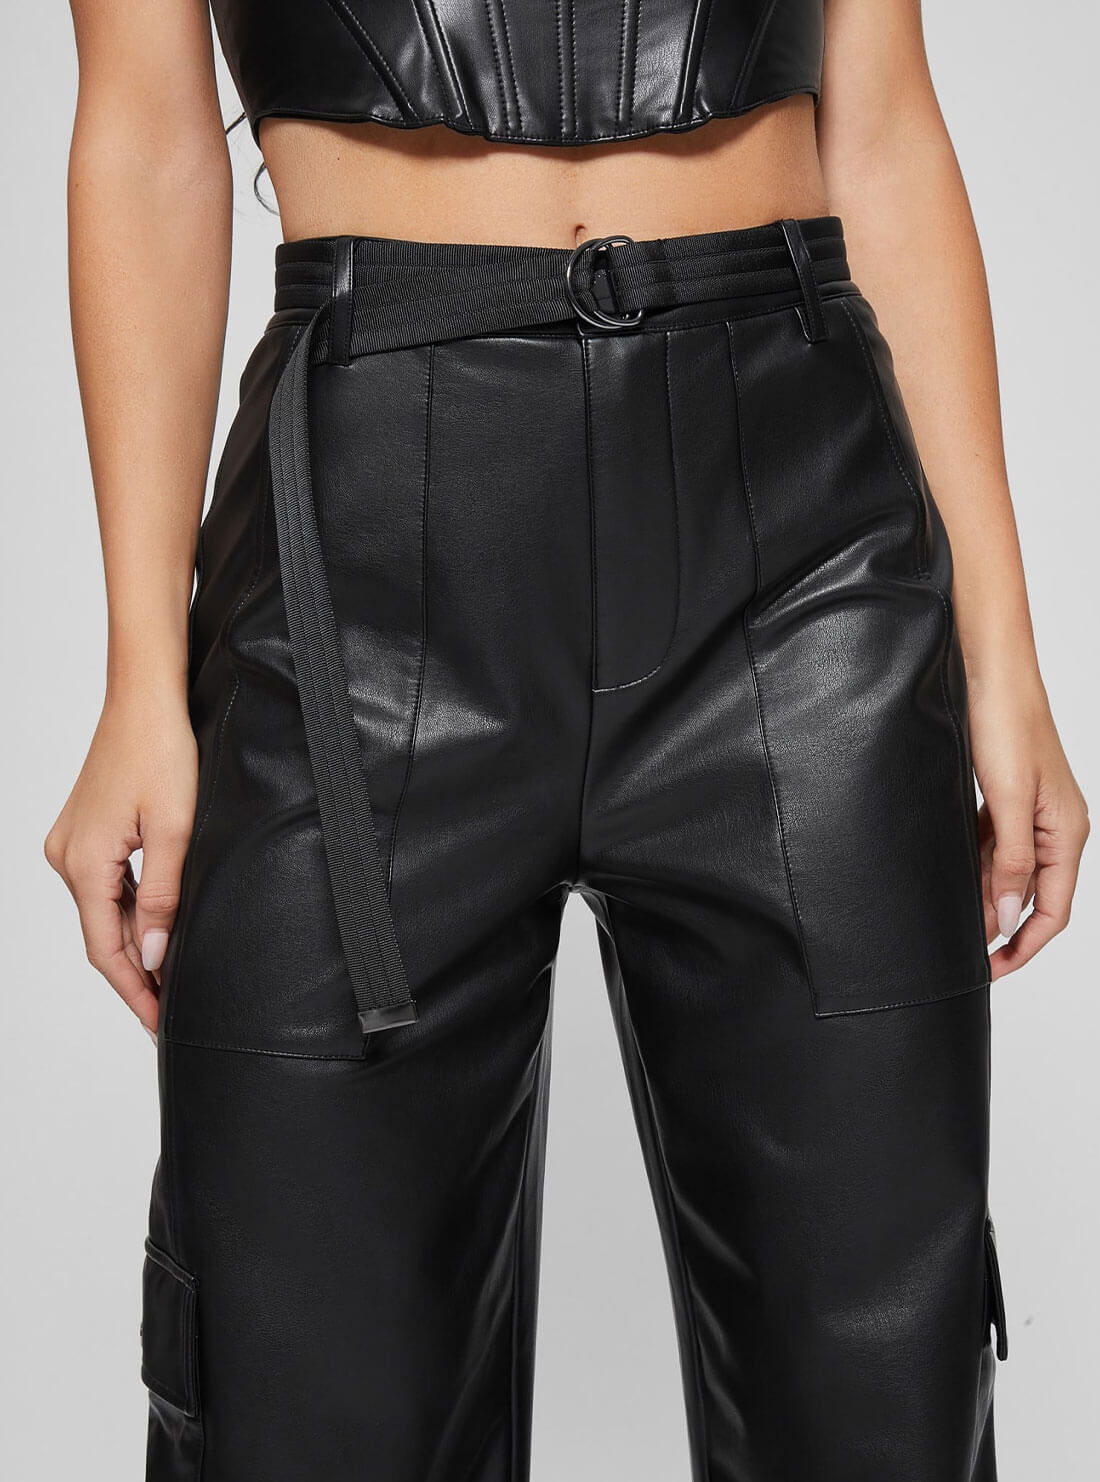 Black Gwen Leather Cargo Pants | GUESS Women's Apparel | front detail 